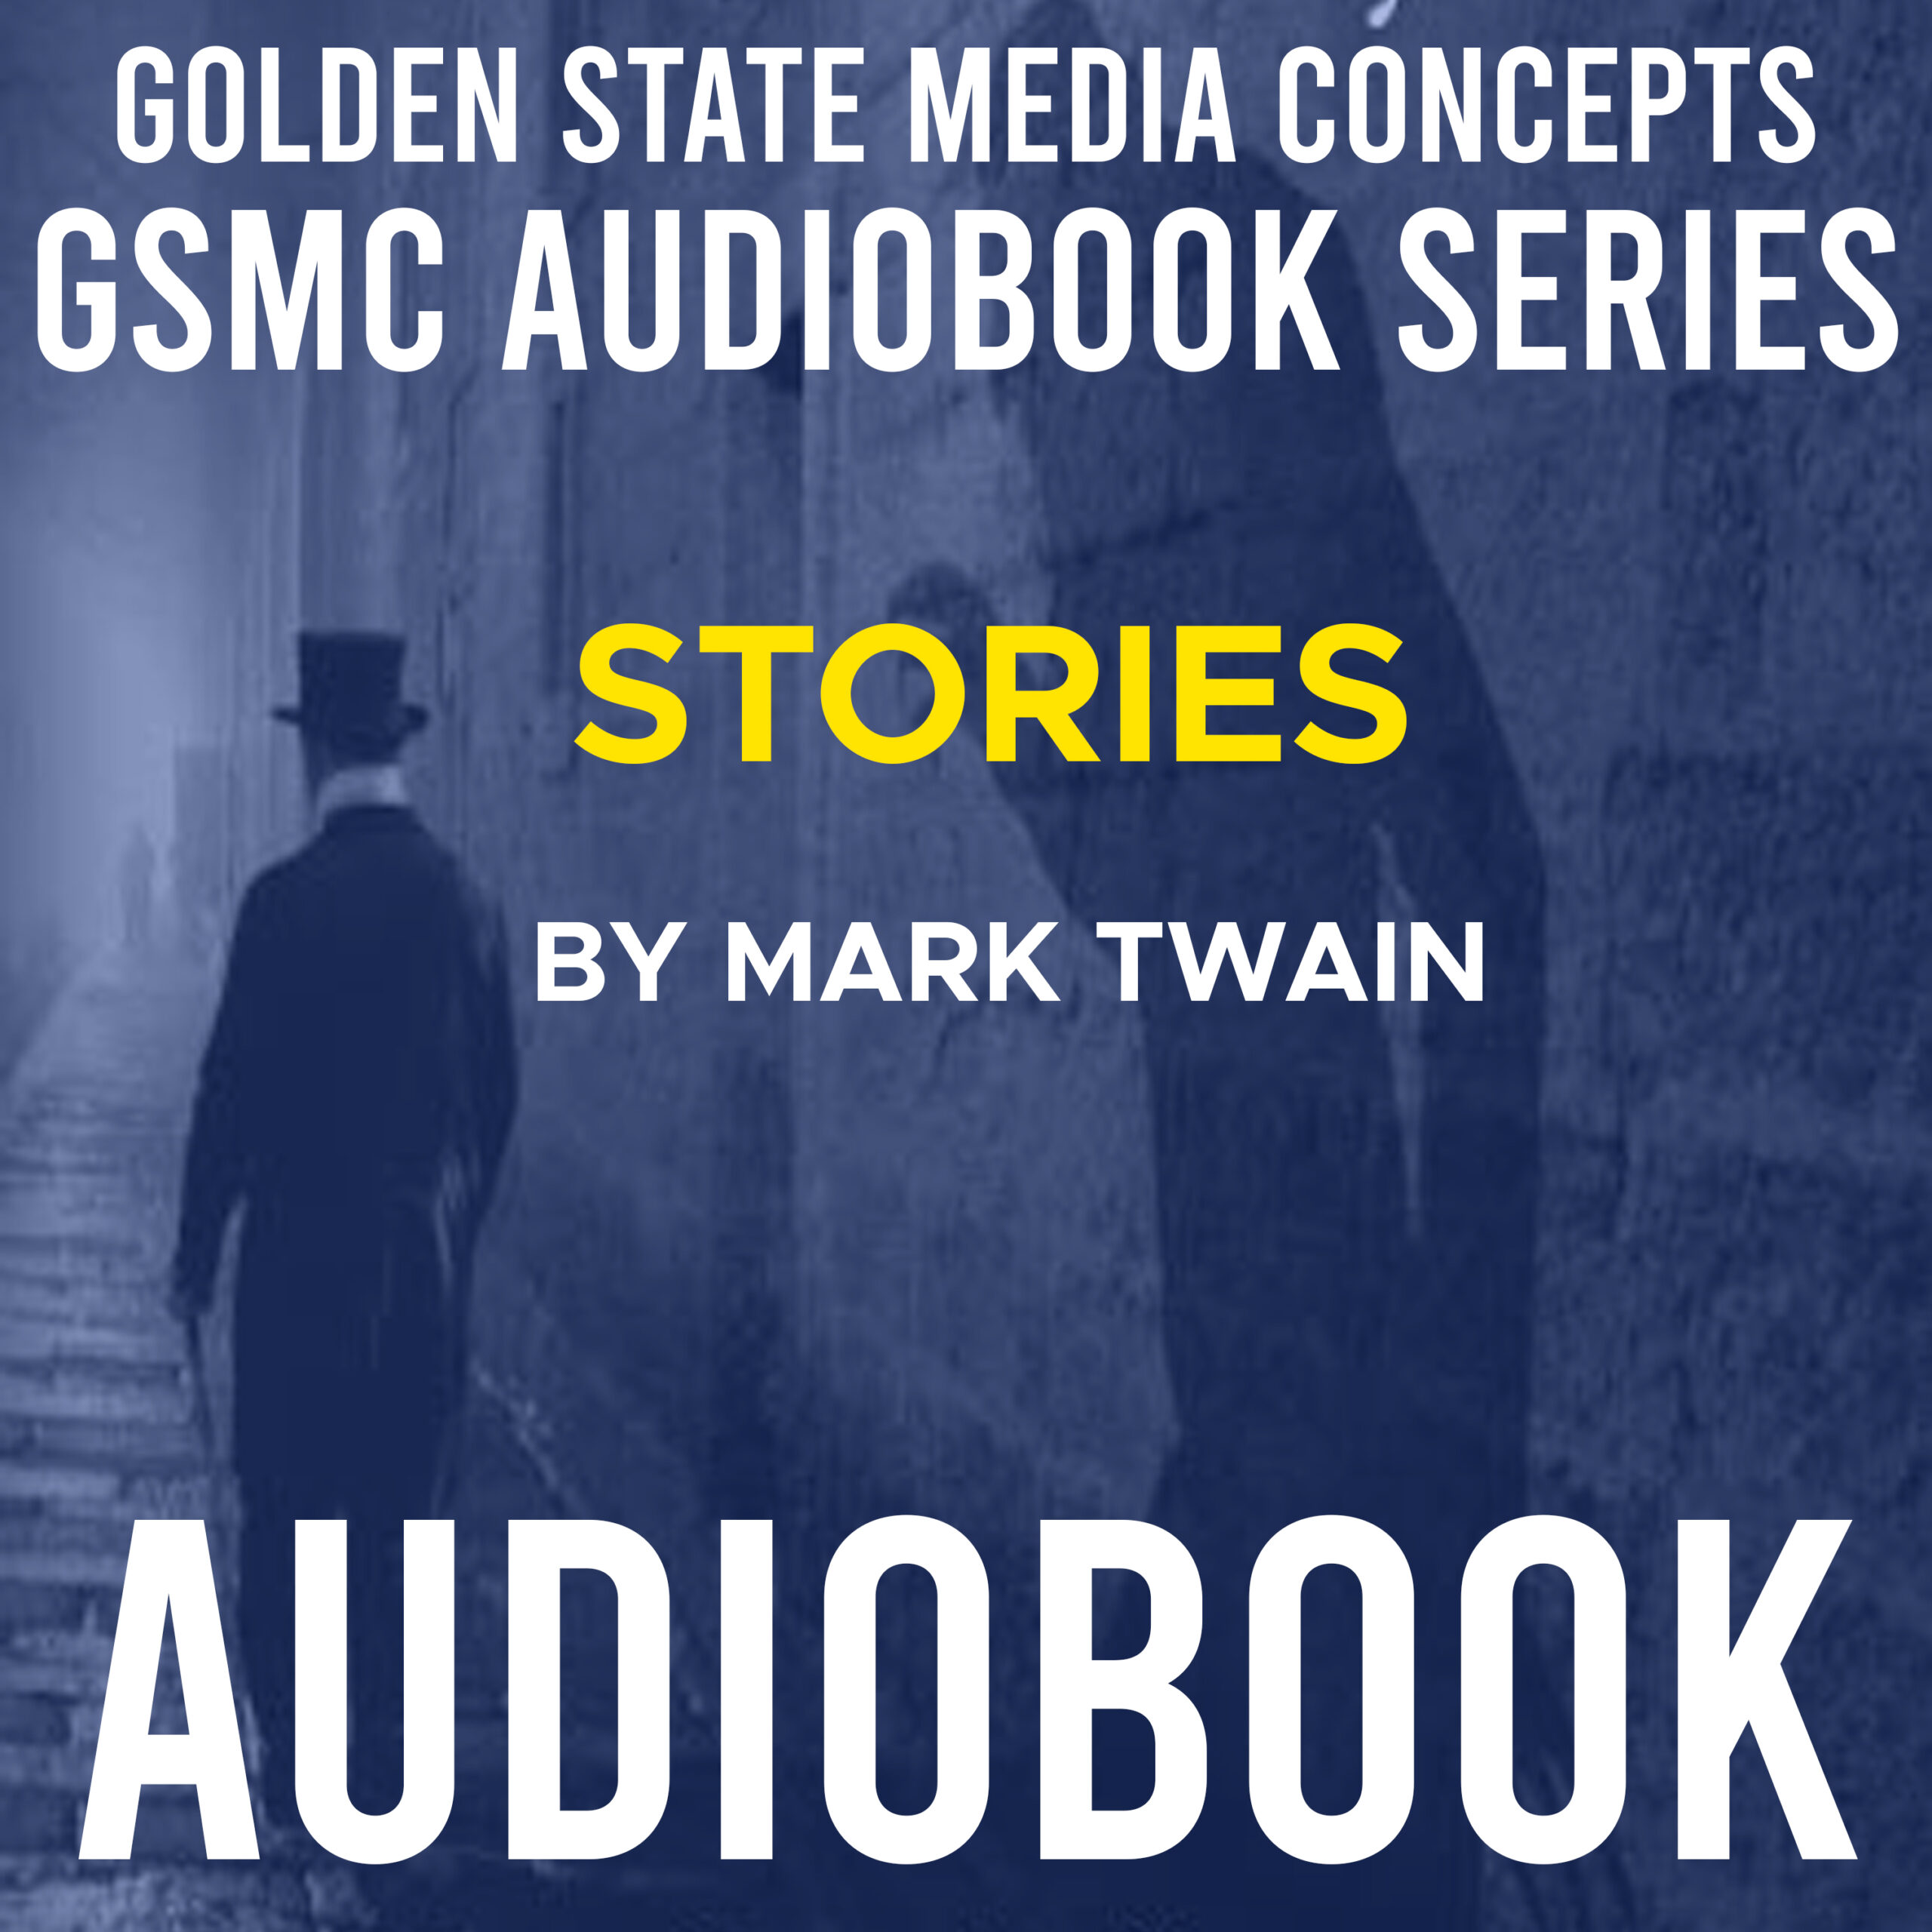 GSMC Audiobook Series: Stories by Mark Twain